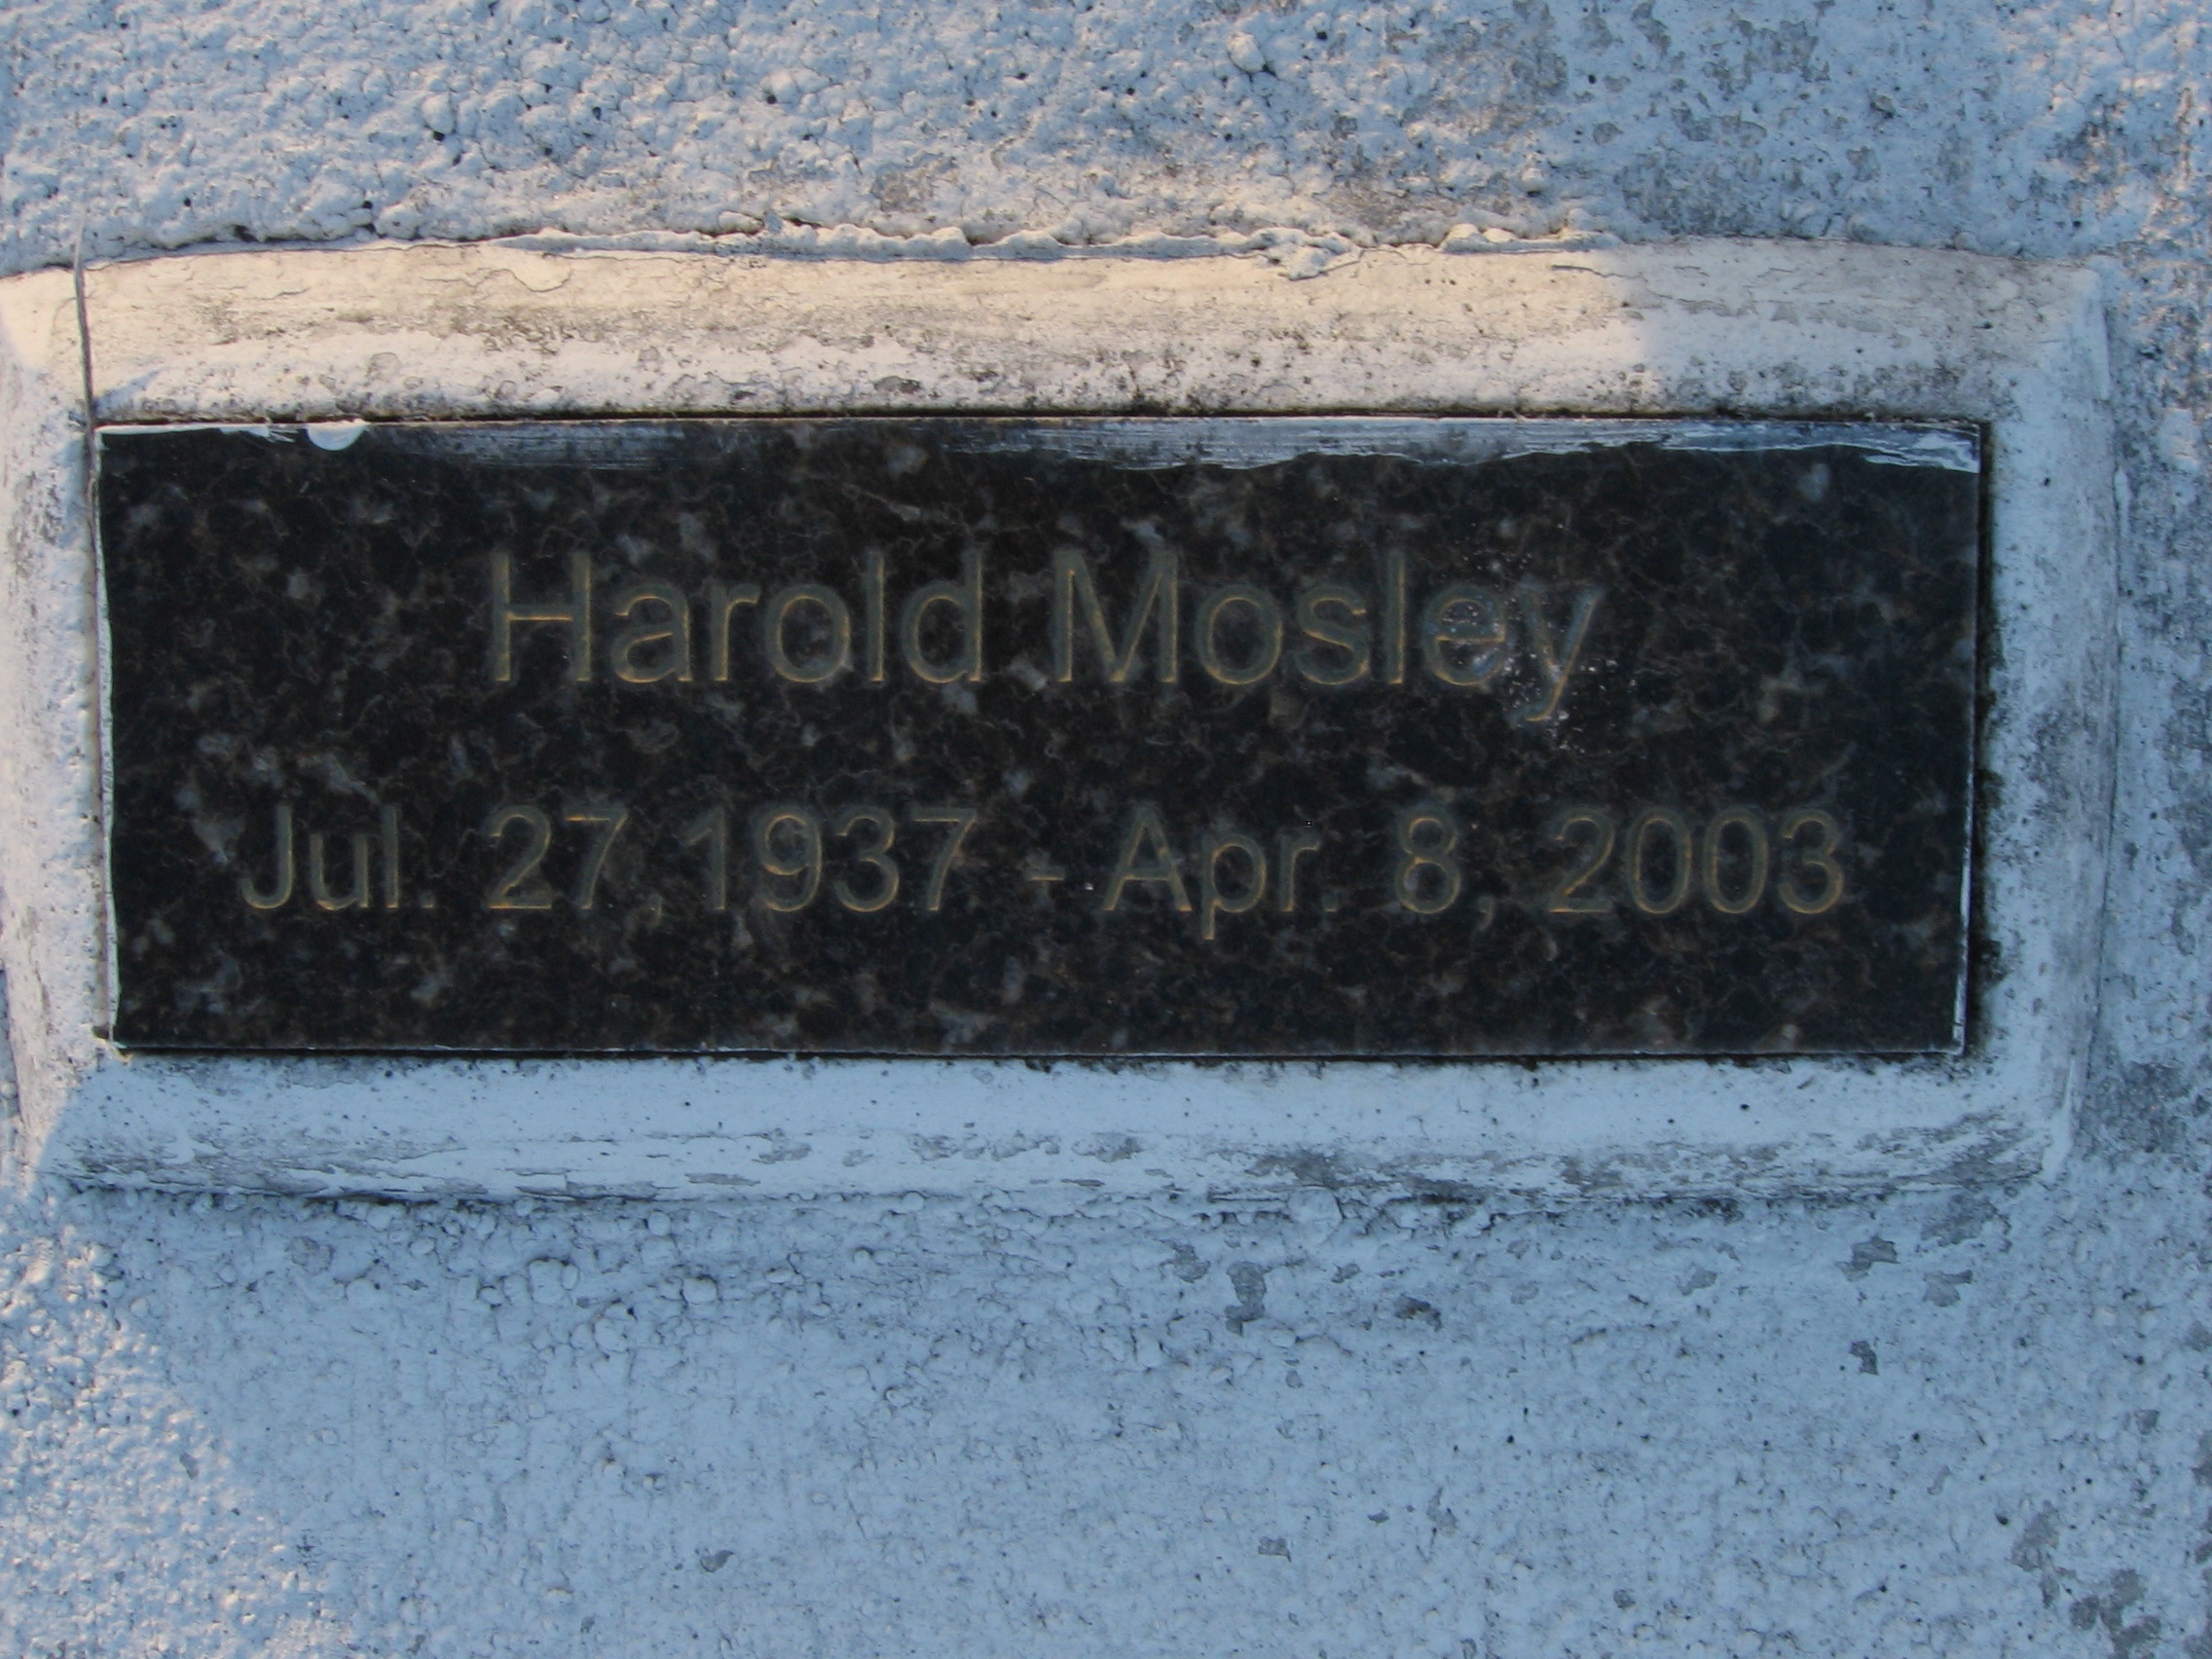 Harold Mosley